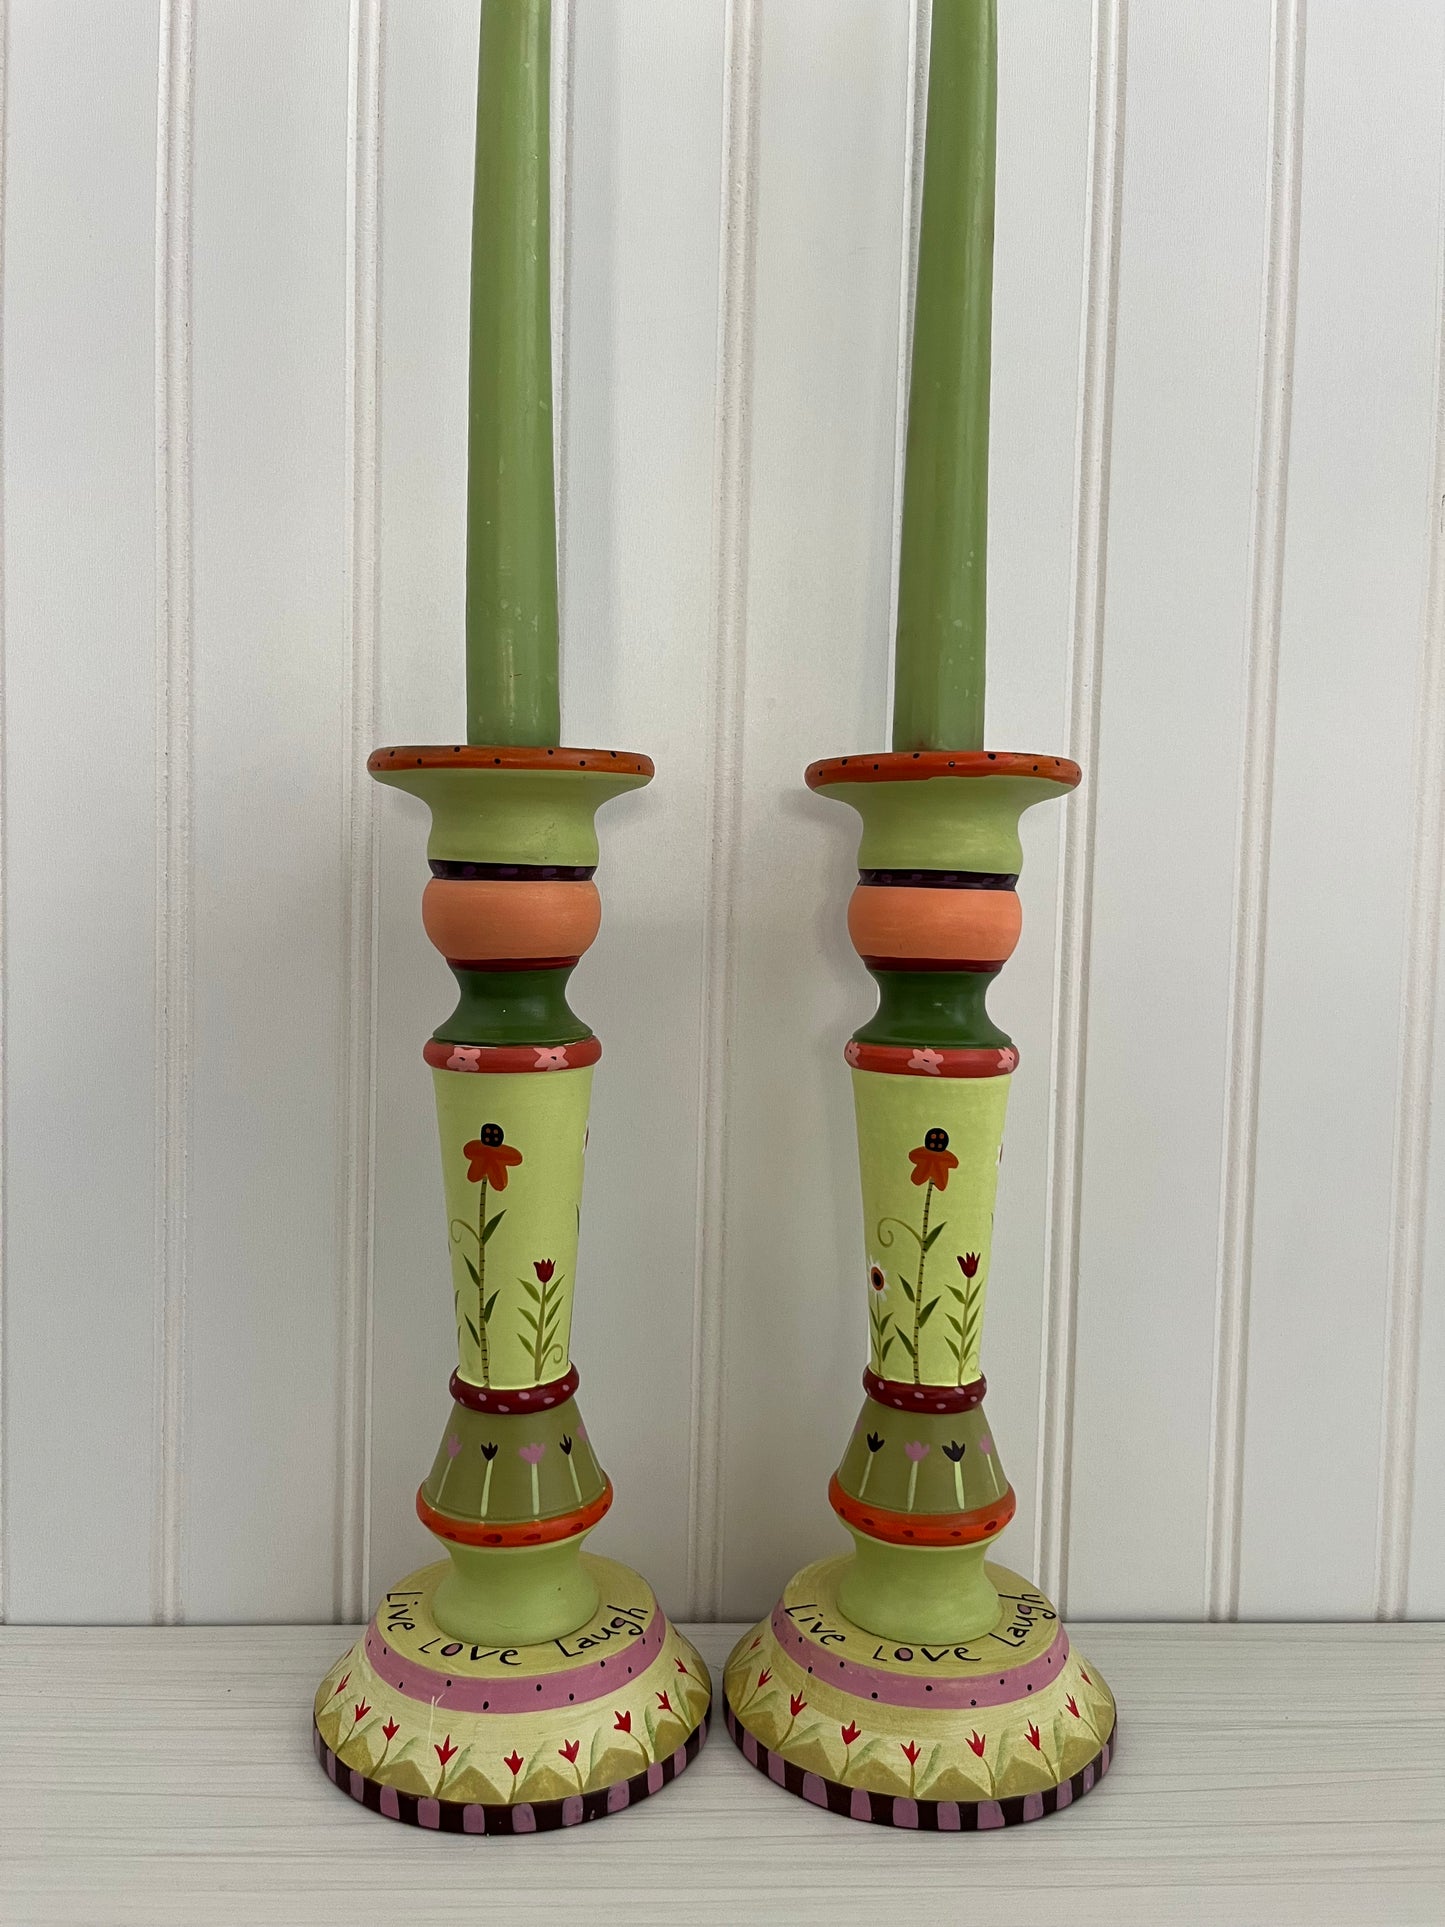 Circa 2005 Tracy Porter Style Hand-Painted Wood Candlesticks - Whimsical Folk Art